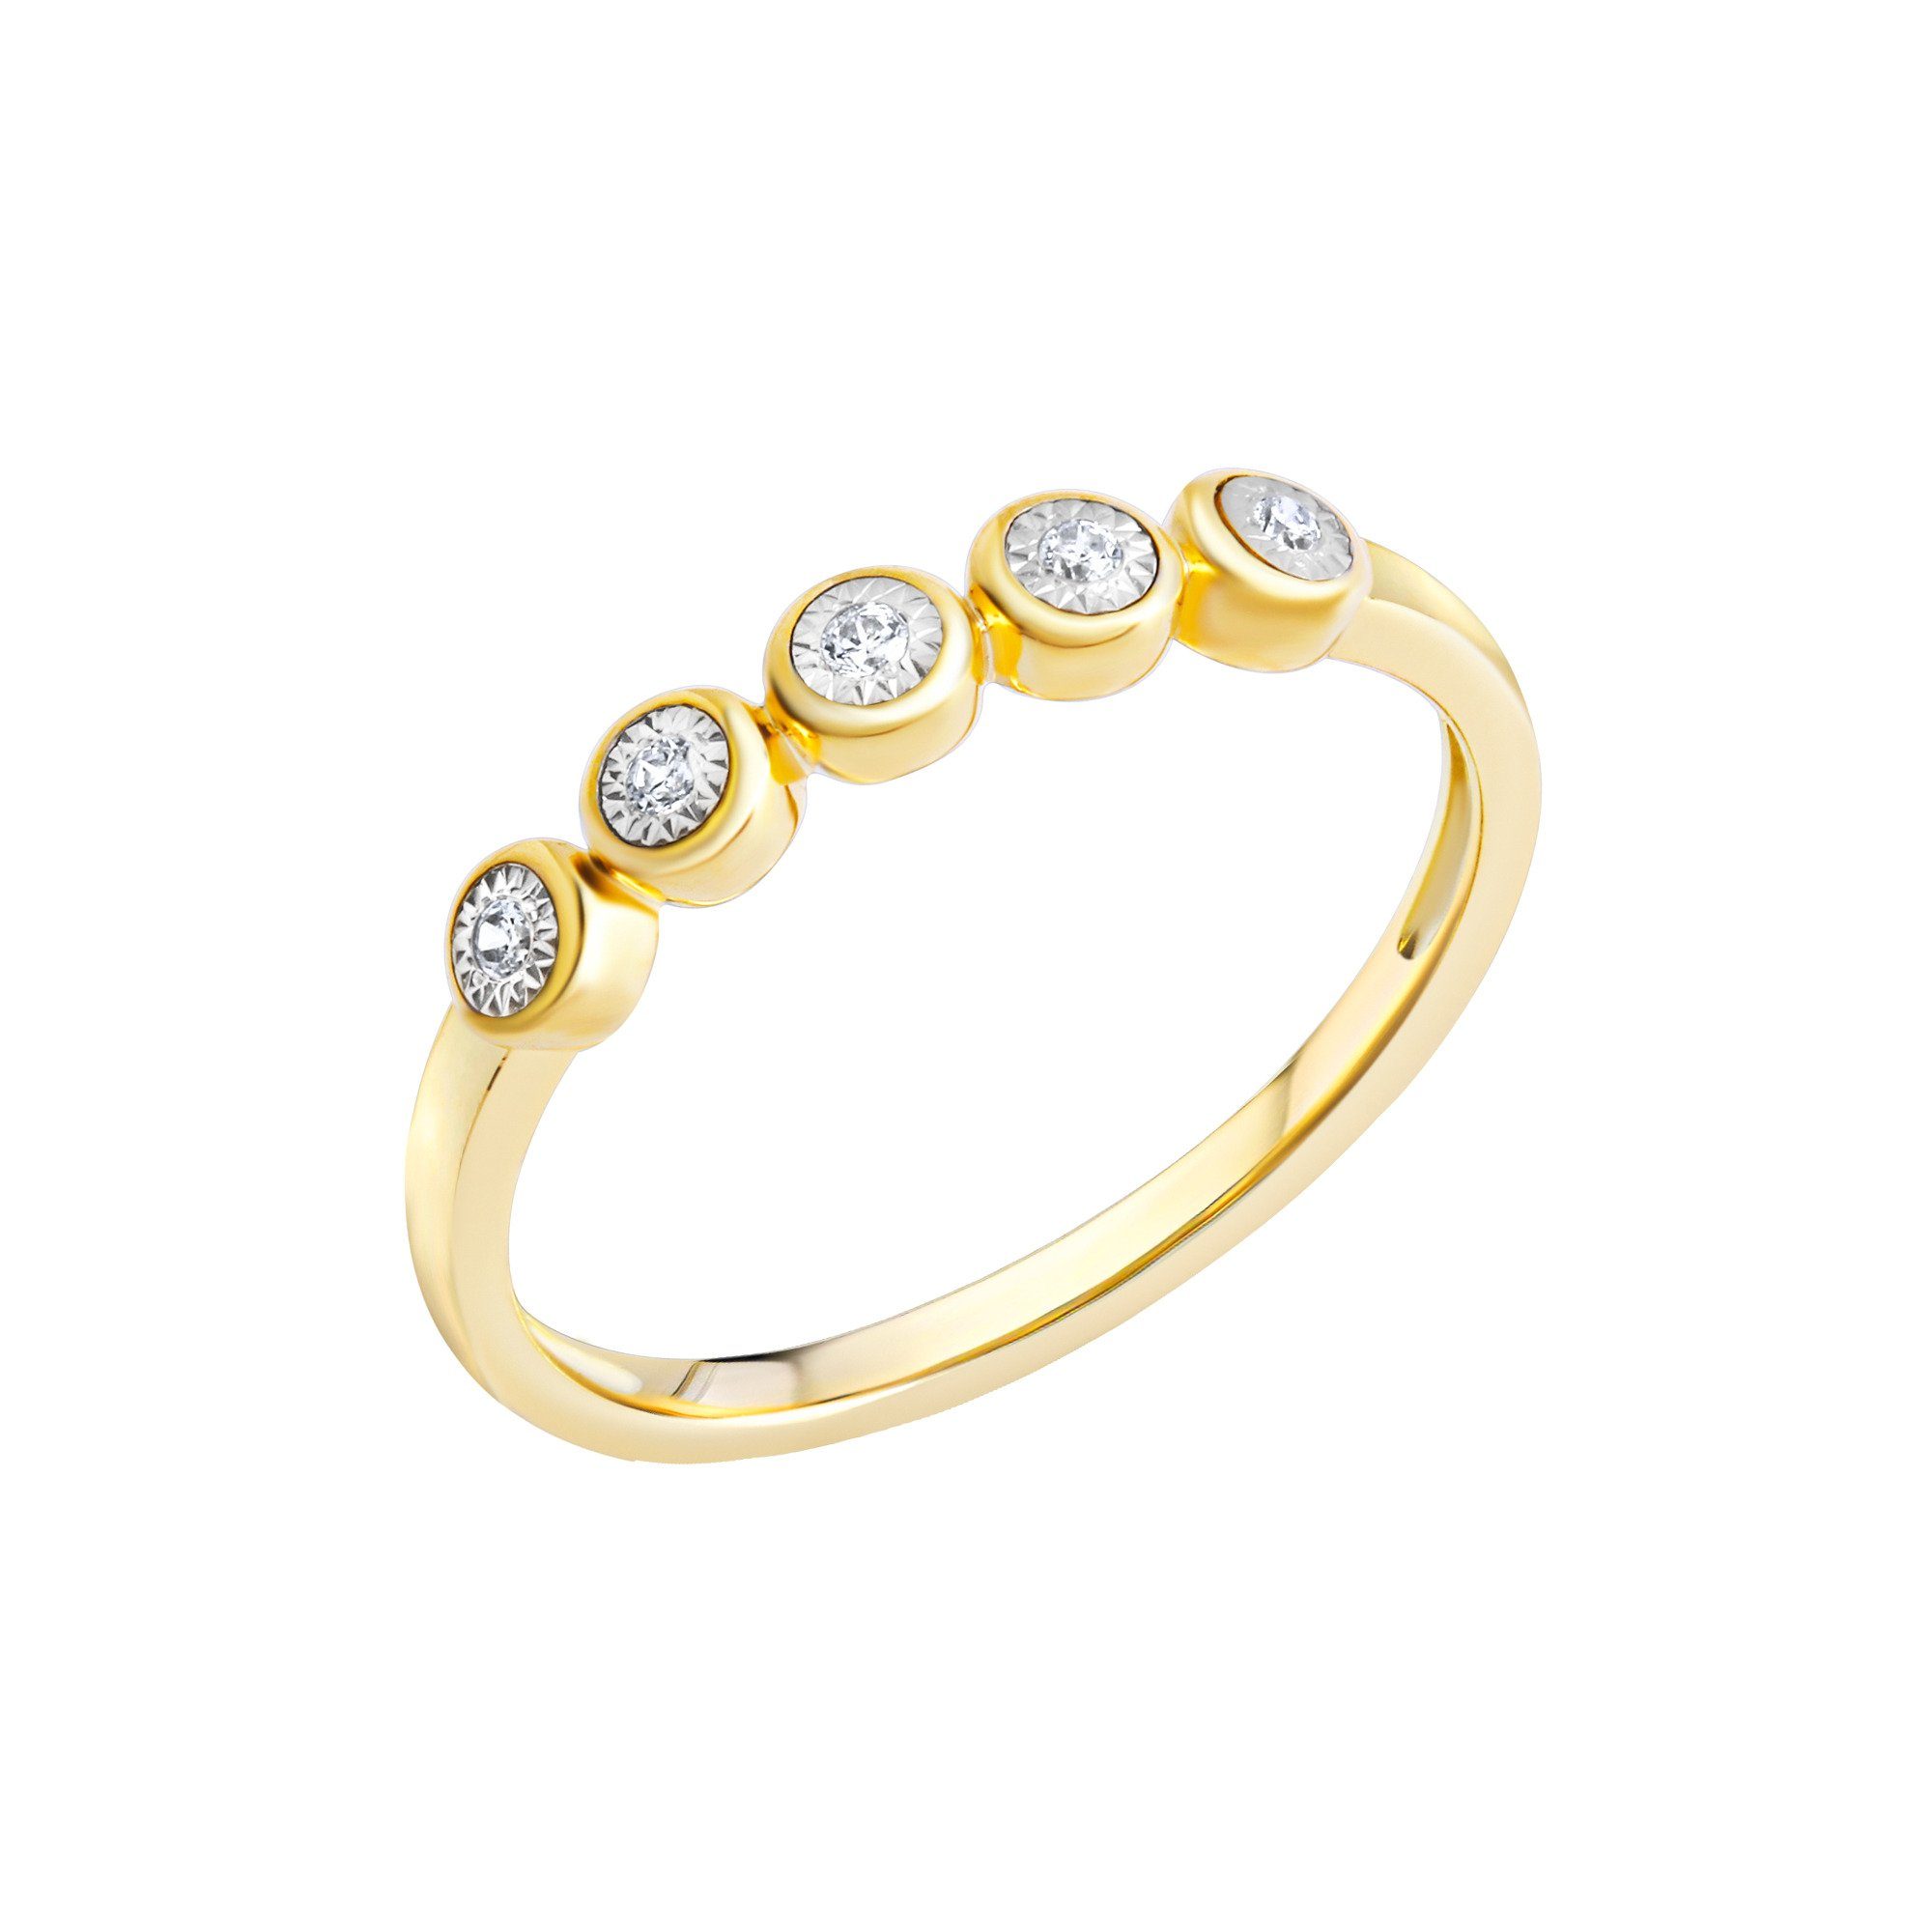 by Gelbgold 585 K. Ellen bicolor Fingerring Diamonds Brill.